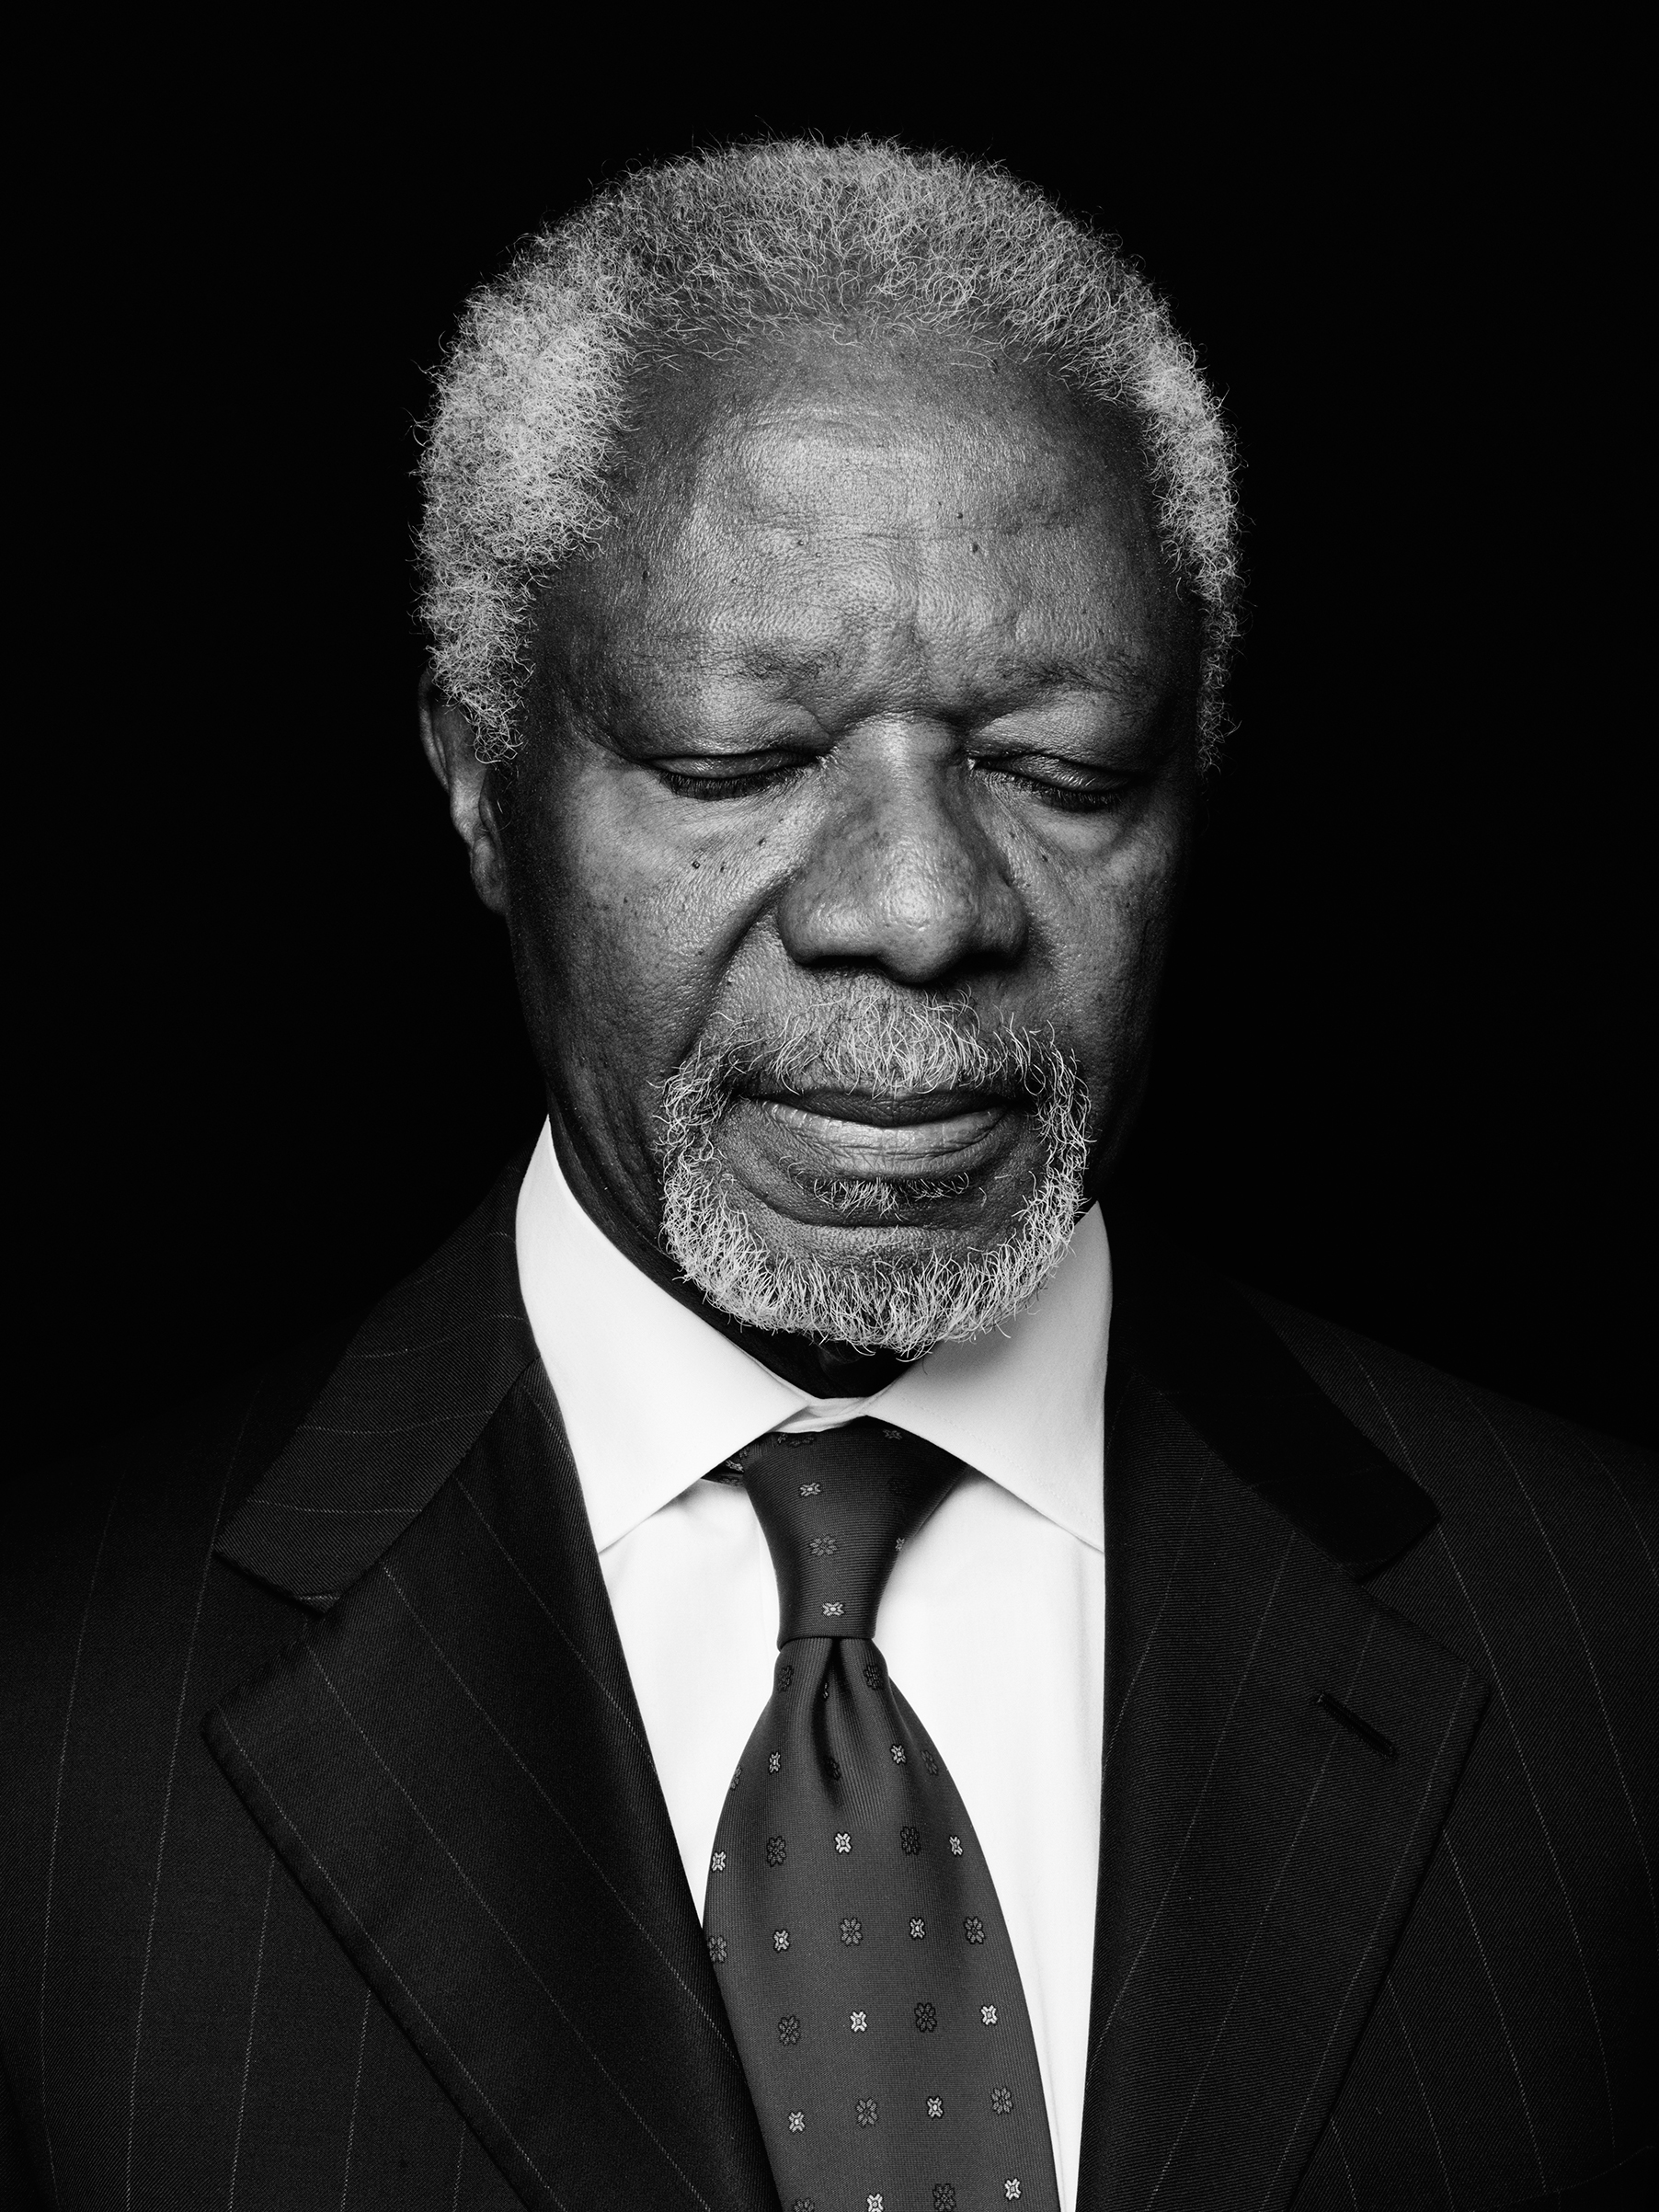 Annan, former U.N. Secretary-General, pictured on Feb. 28, 2013 (Anoush Abrar—13 Photo/Redux)